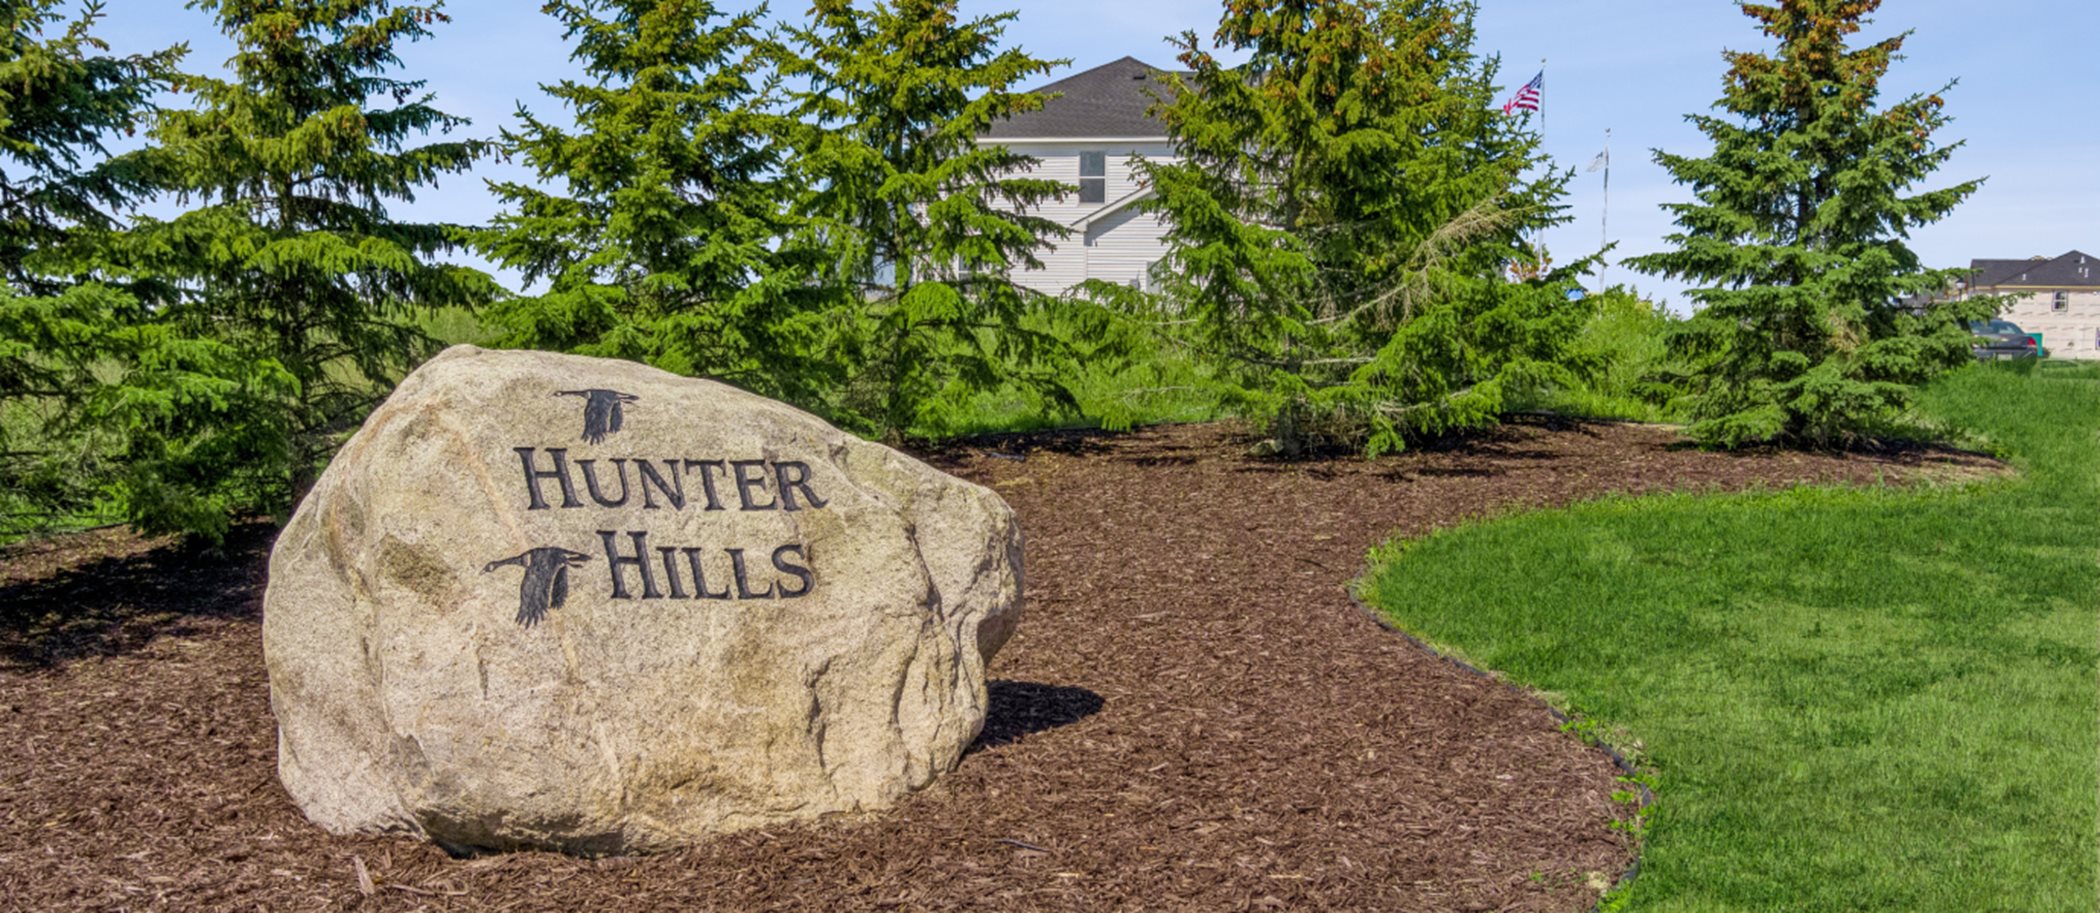 Hunter Hills welcome